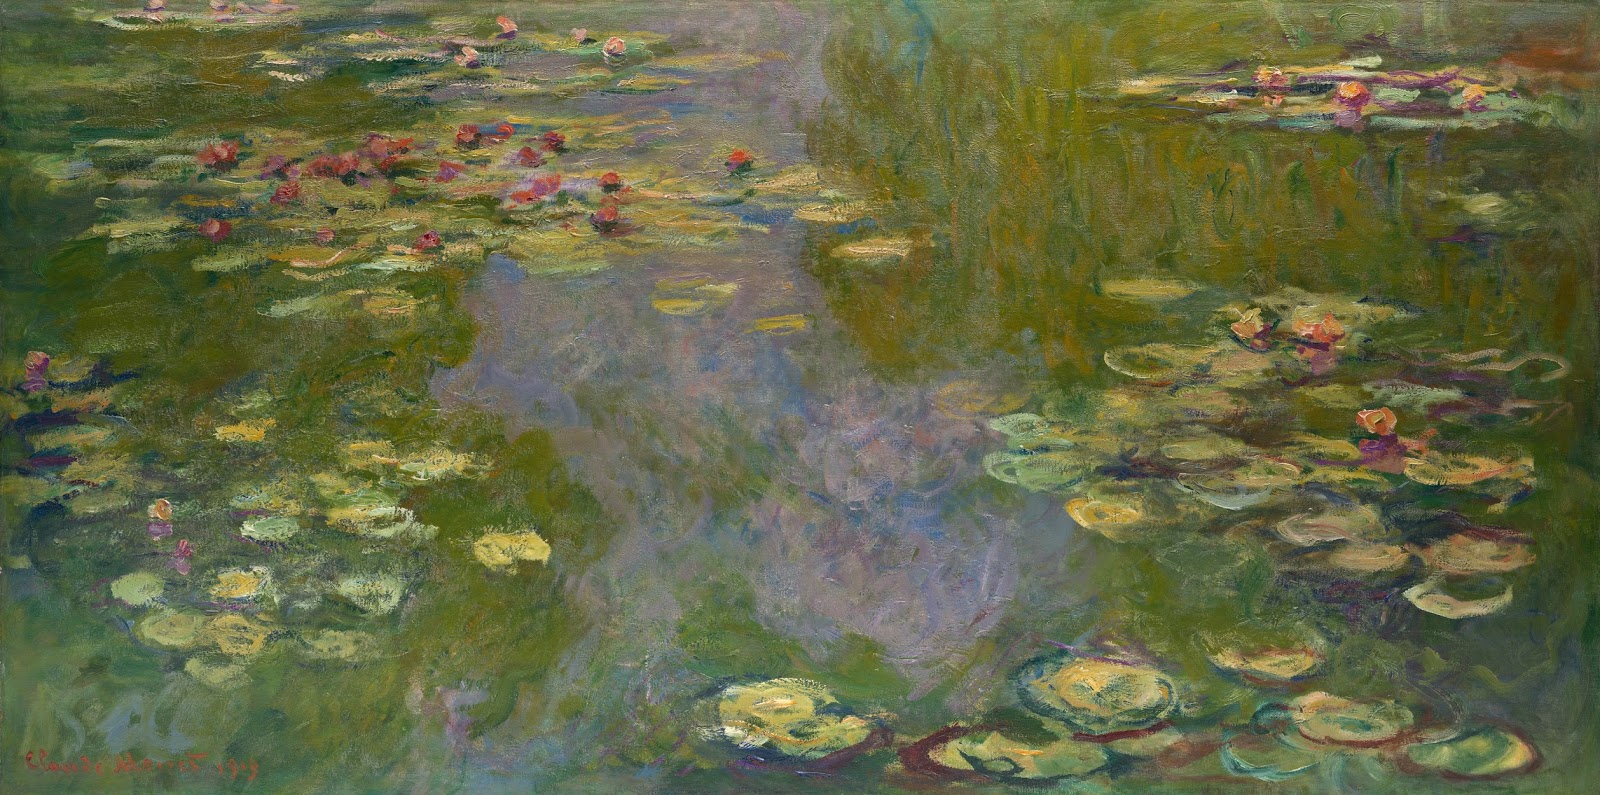 Claude+Monet-1840-1926 (998).jpg